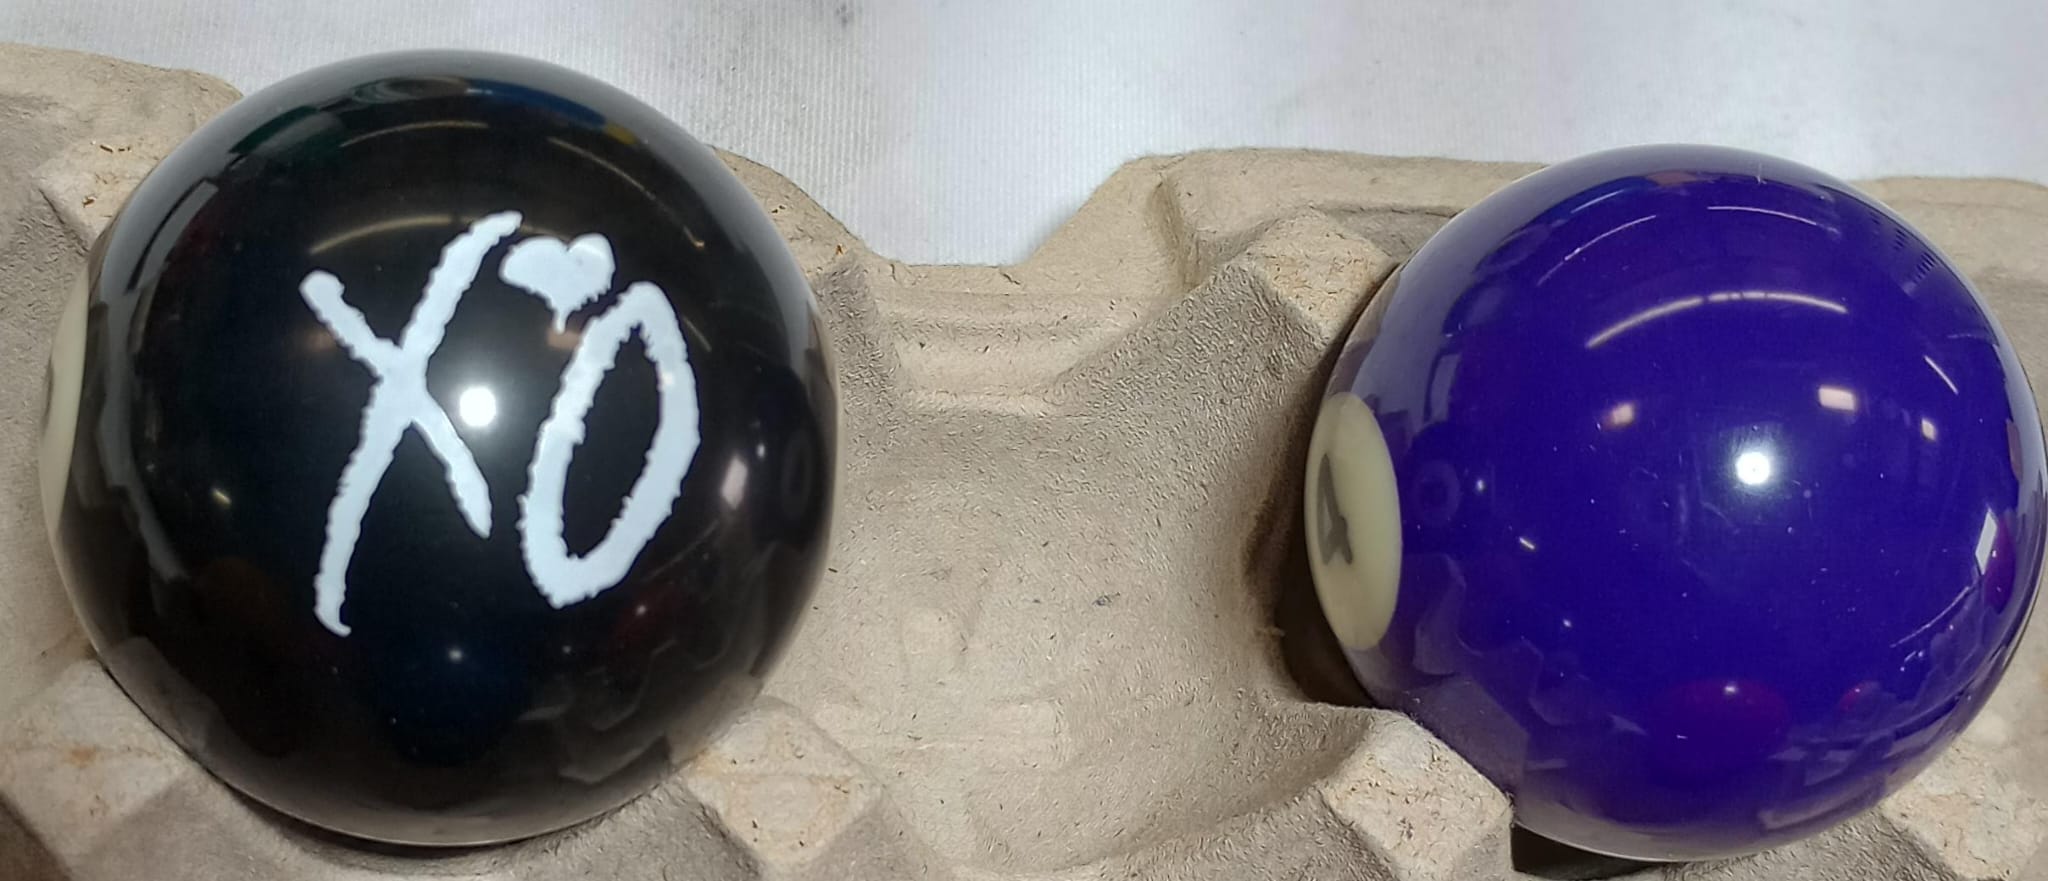 Custom cue billards balls printed with logo for the weekend